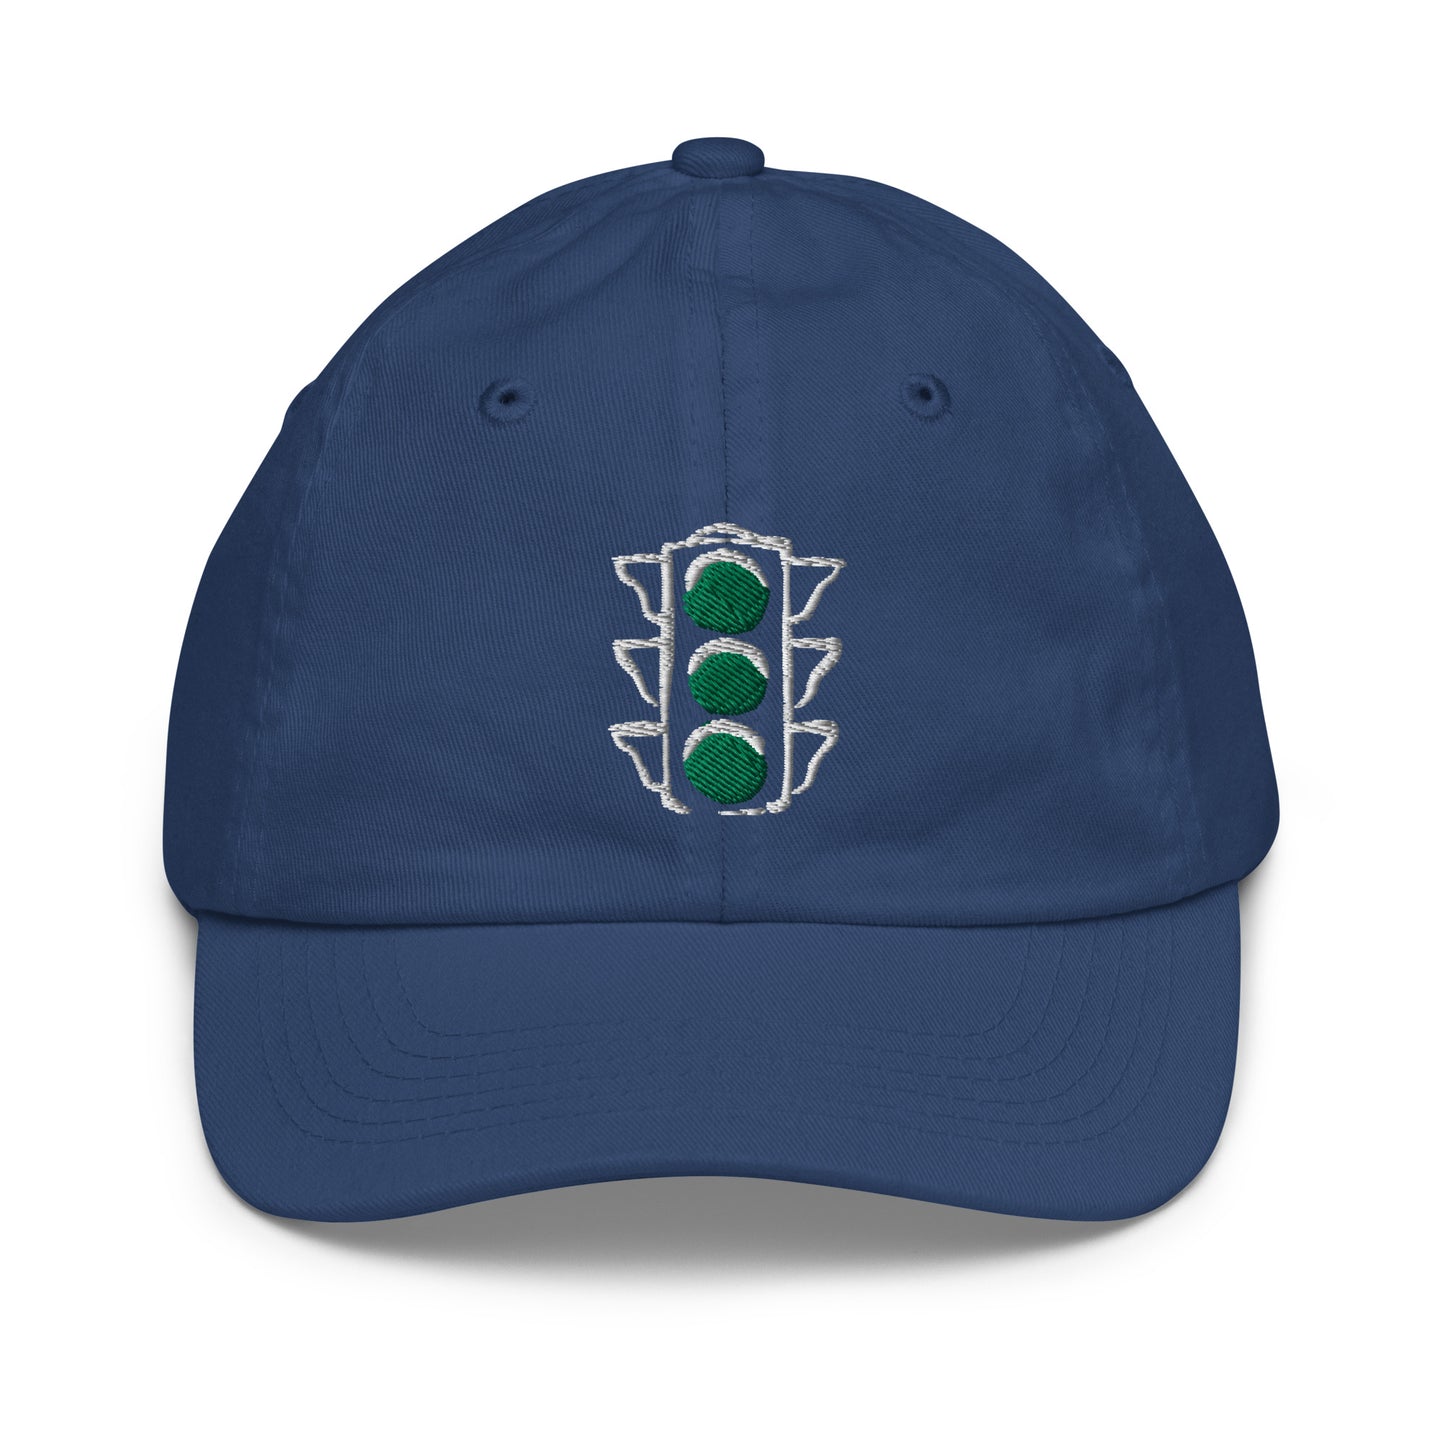 Green Light hat / Greenlights hat / McConaughey Youth baseball cap